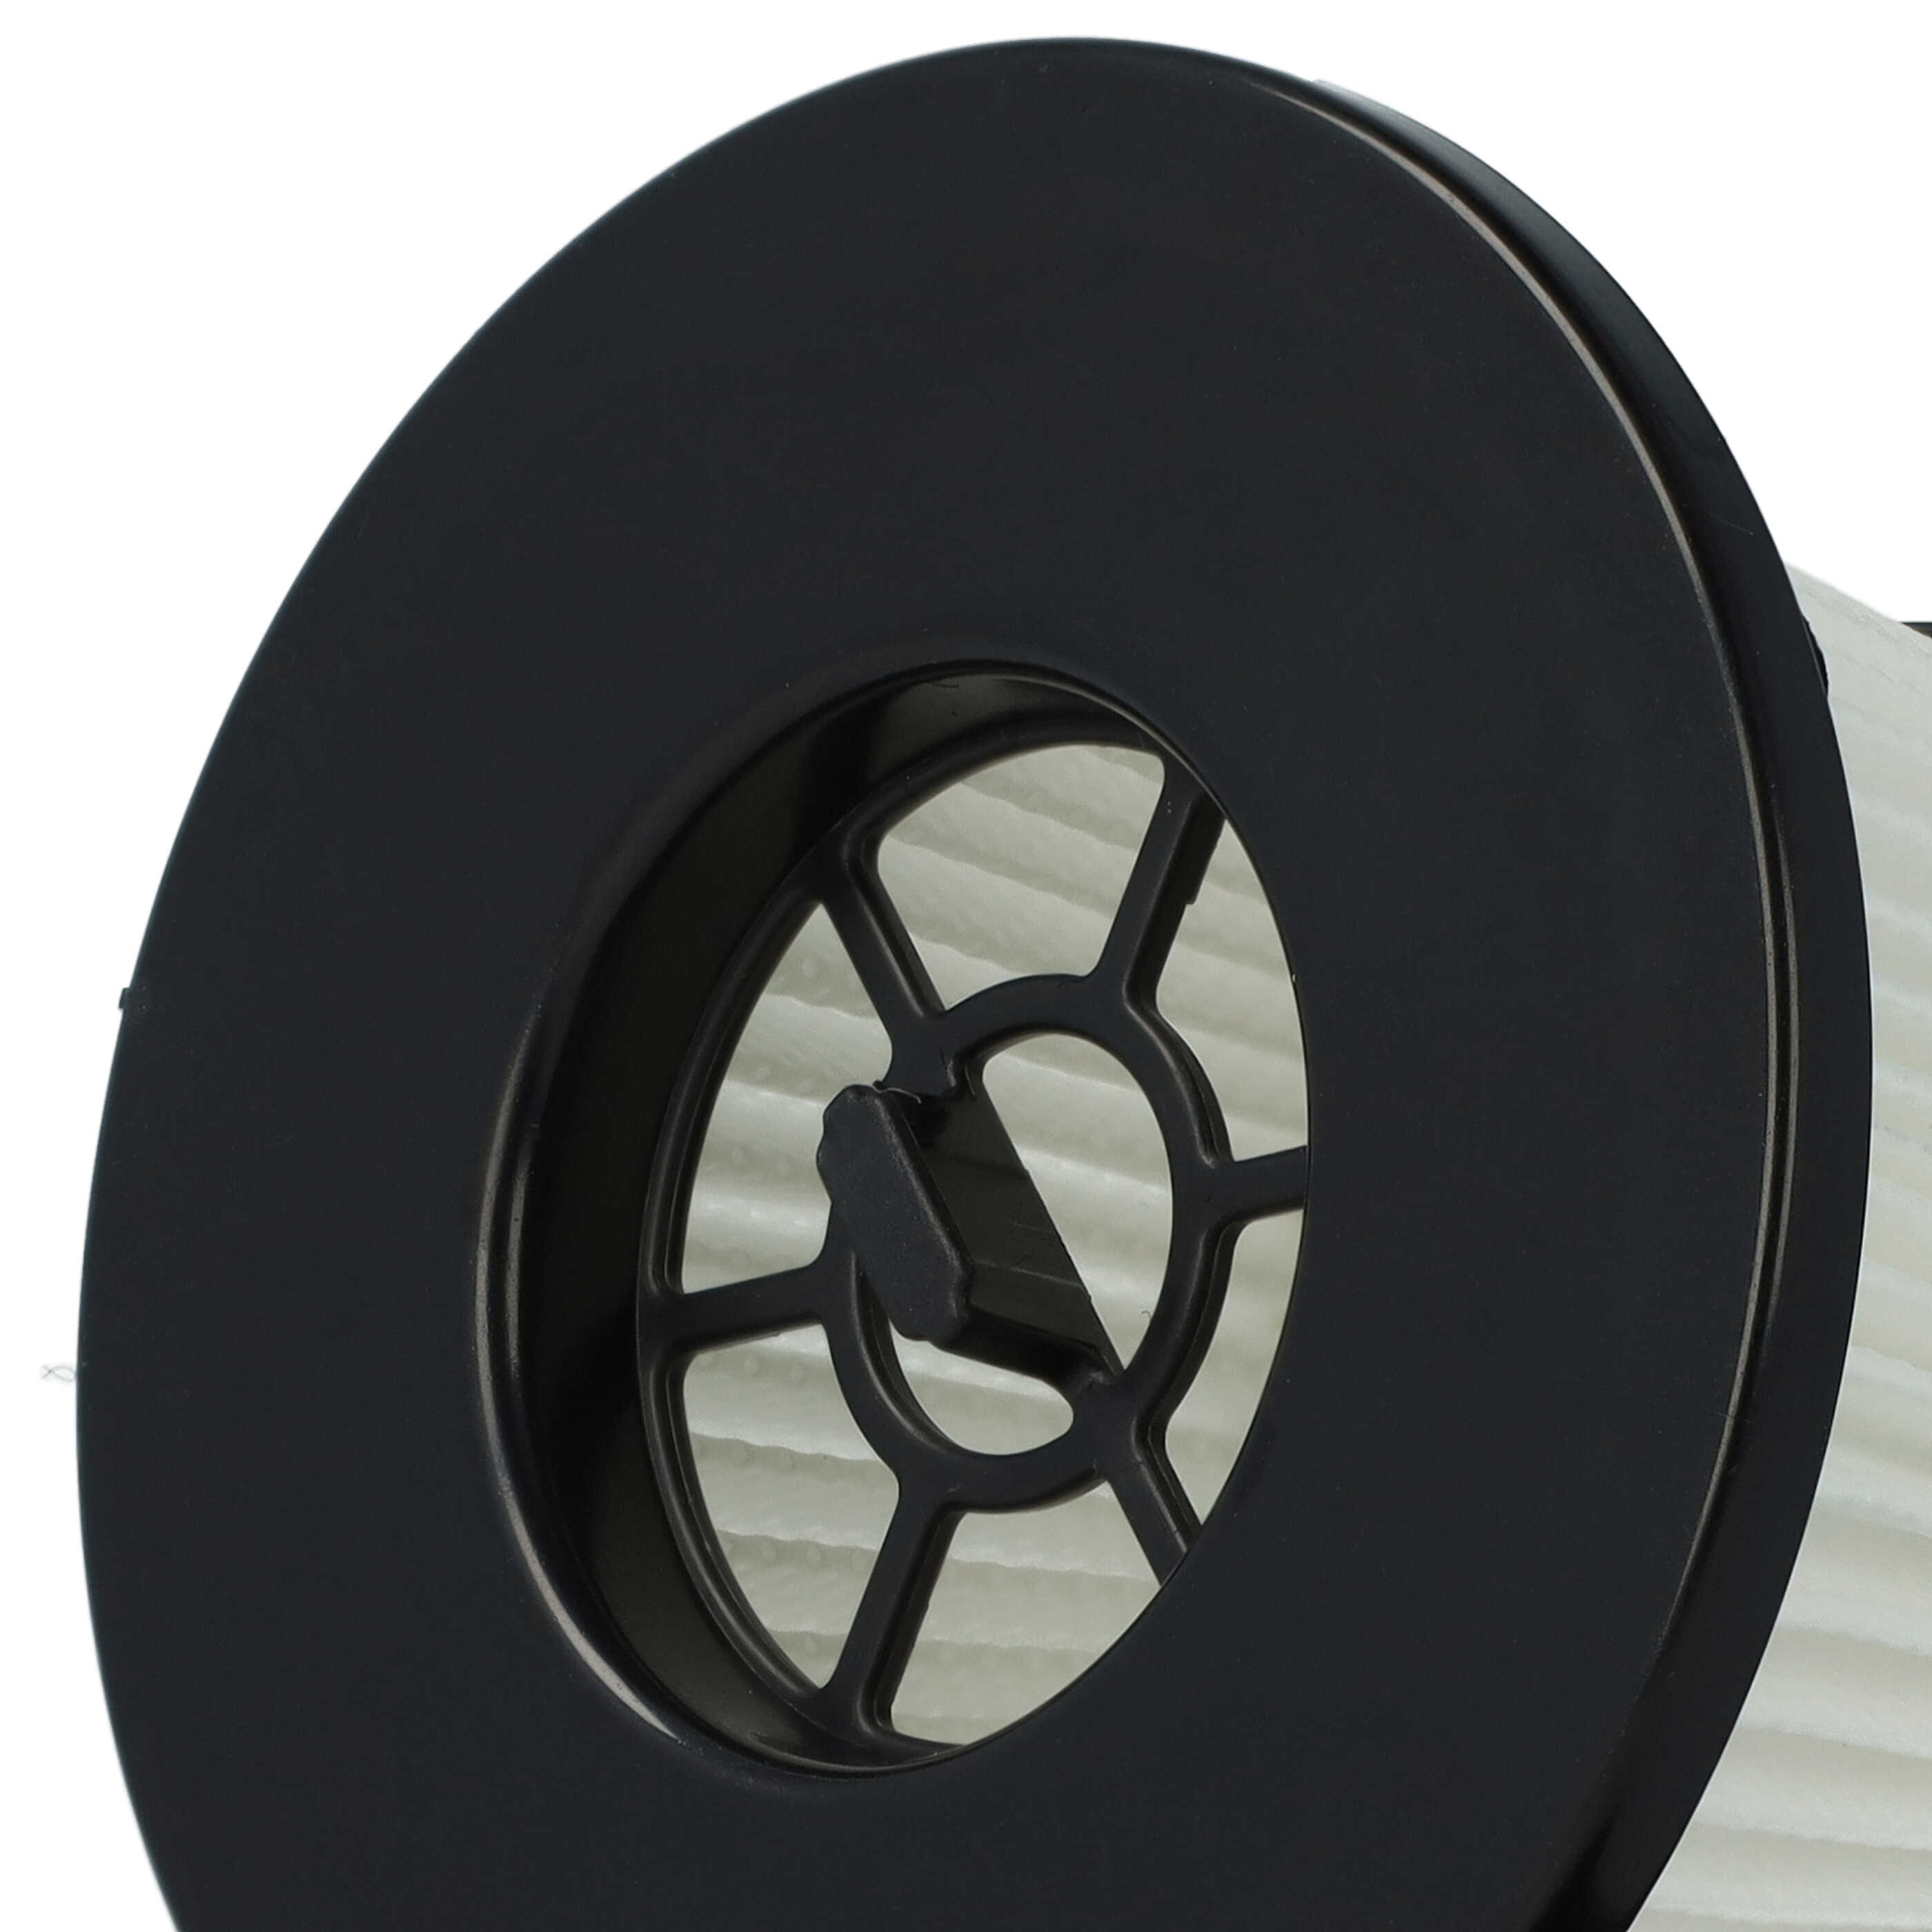 2x HEPA filter suitable for Moosoo K24 Vacuum Cleaner, filter class E10